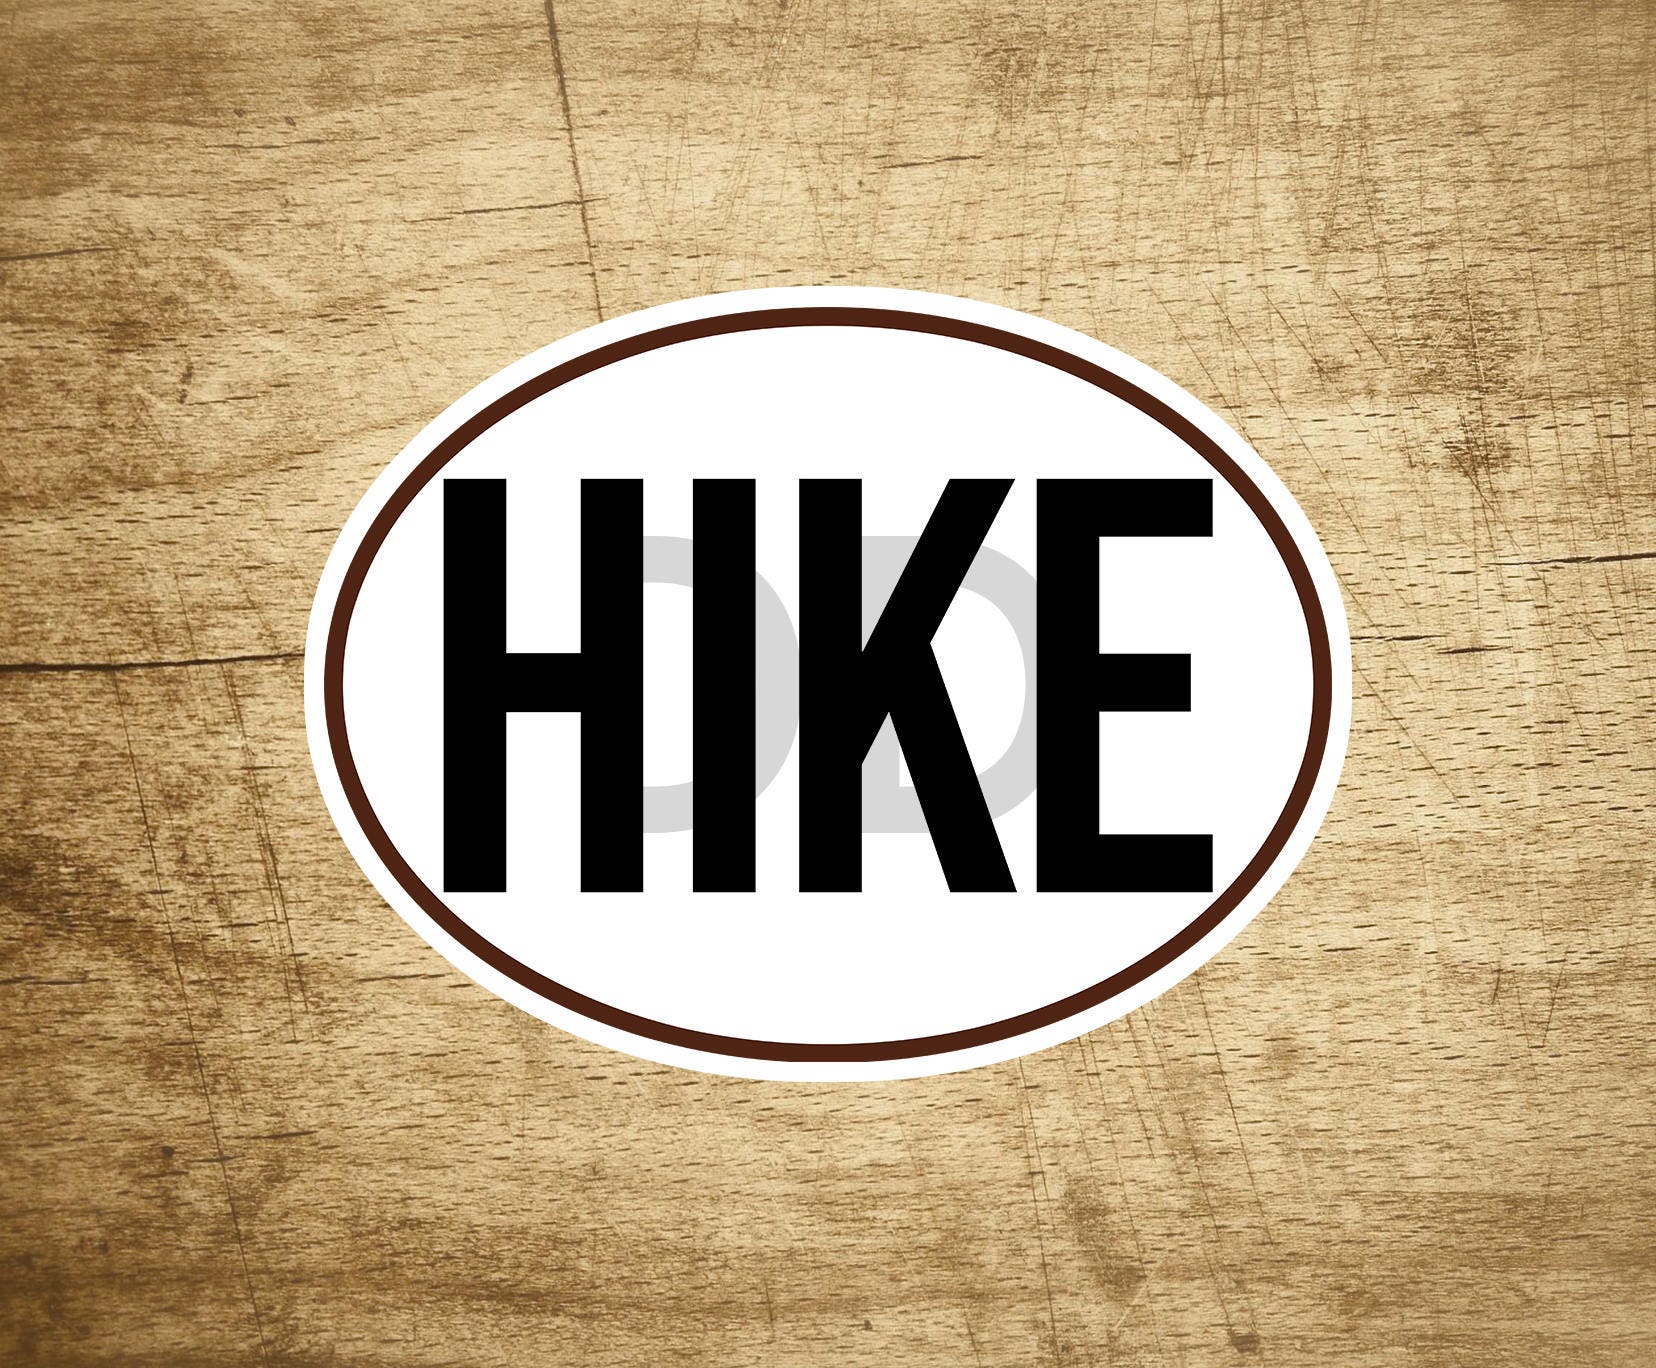 HIKE STICKER DECAL Black And White Oval Hiking Hiker 4" x 3" Euro